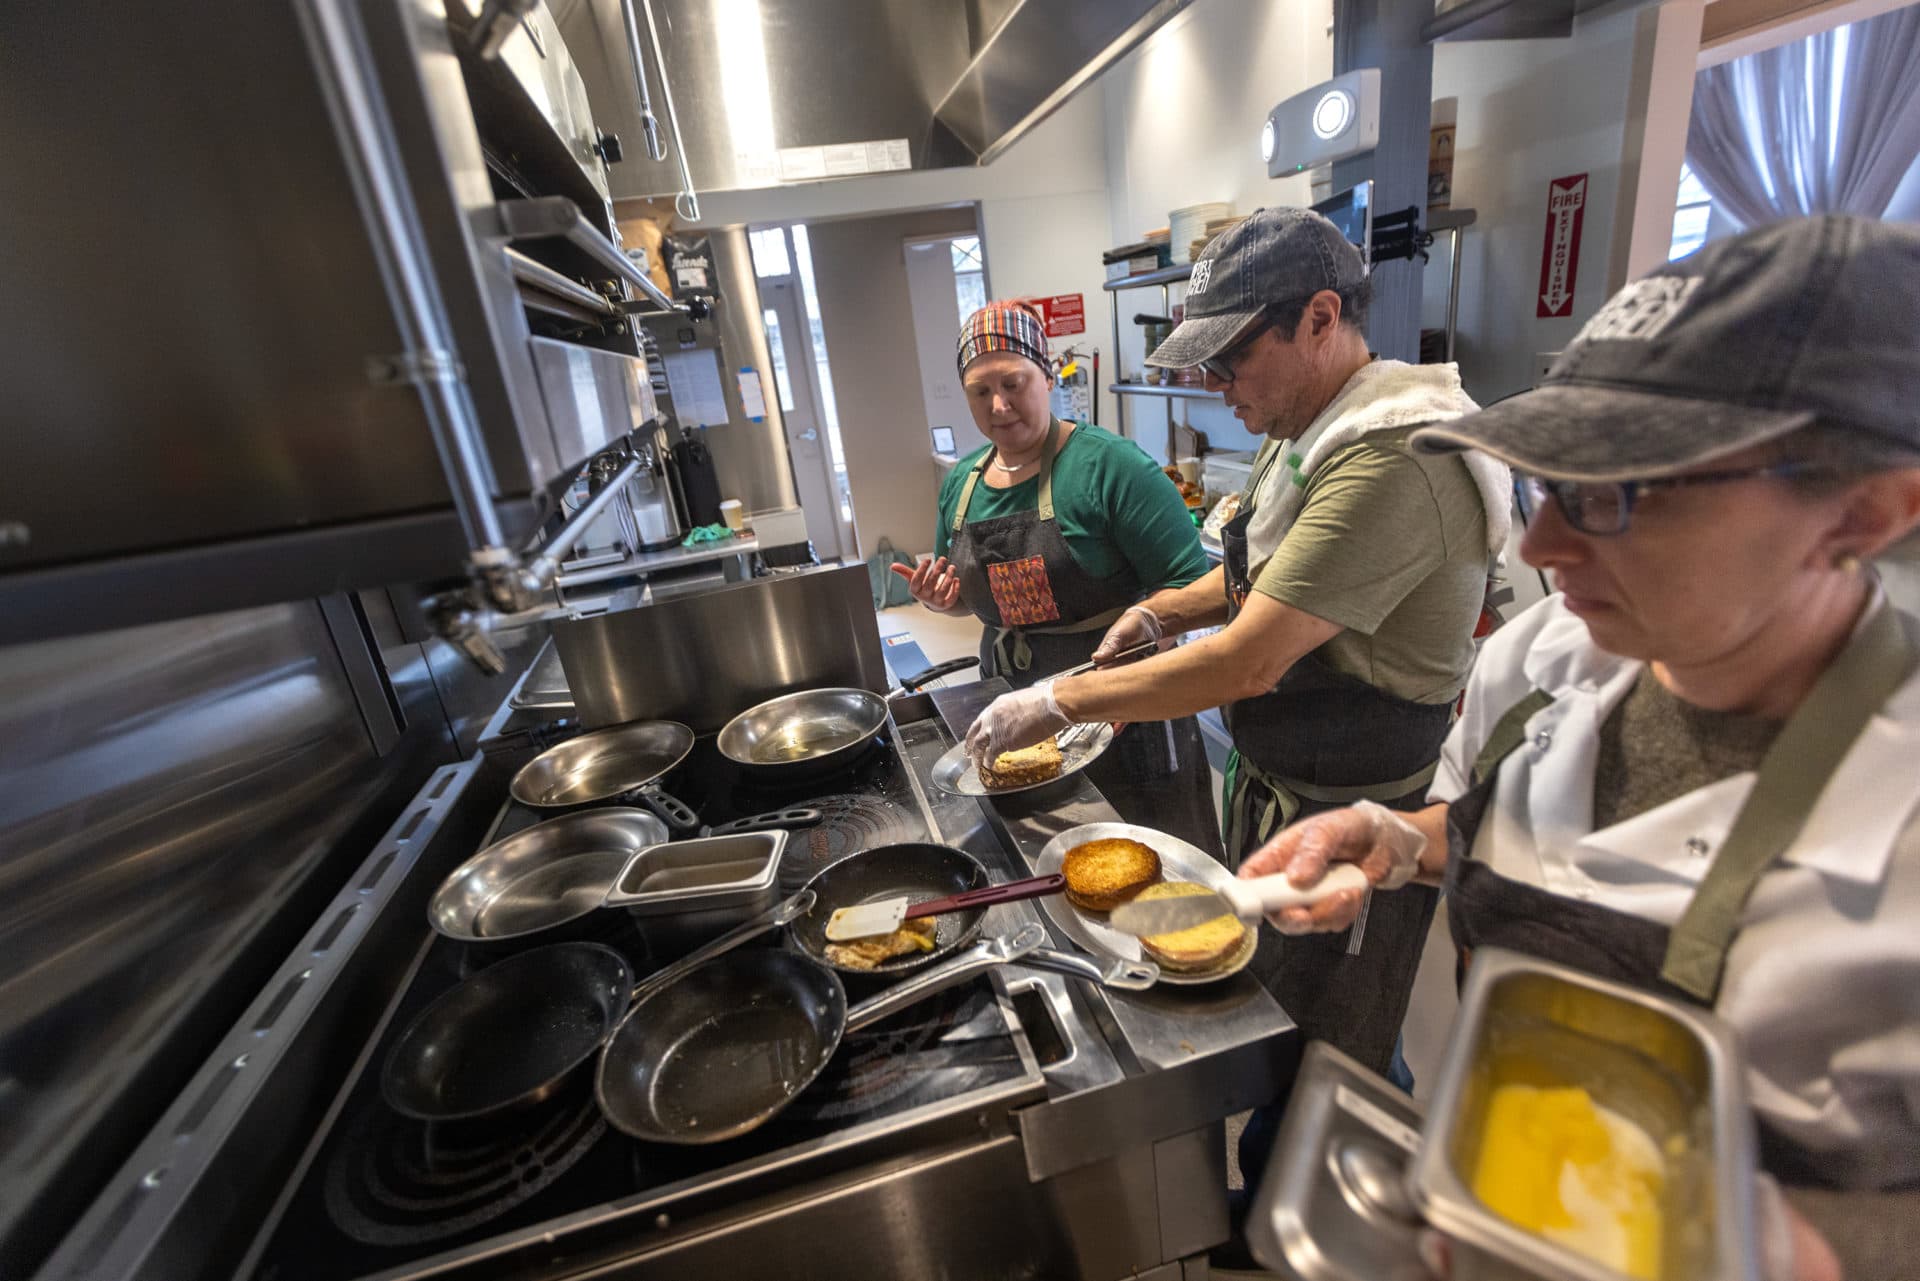 Employees prepare lunch and breakfast sandwiches in the kitchen at Dorchester's Comfort Kitchen. (Jesse Costa/WBUR)